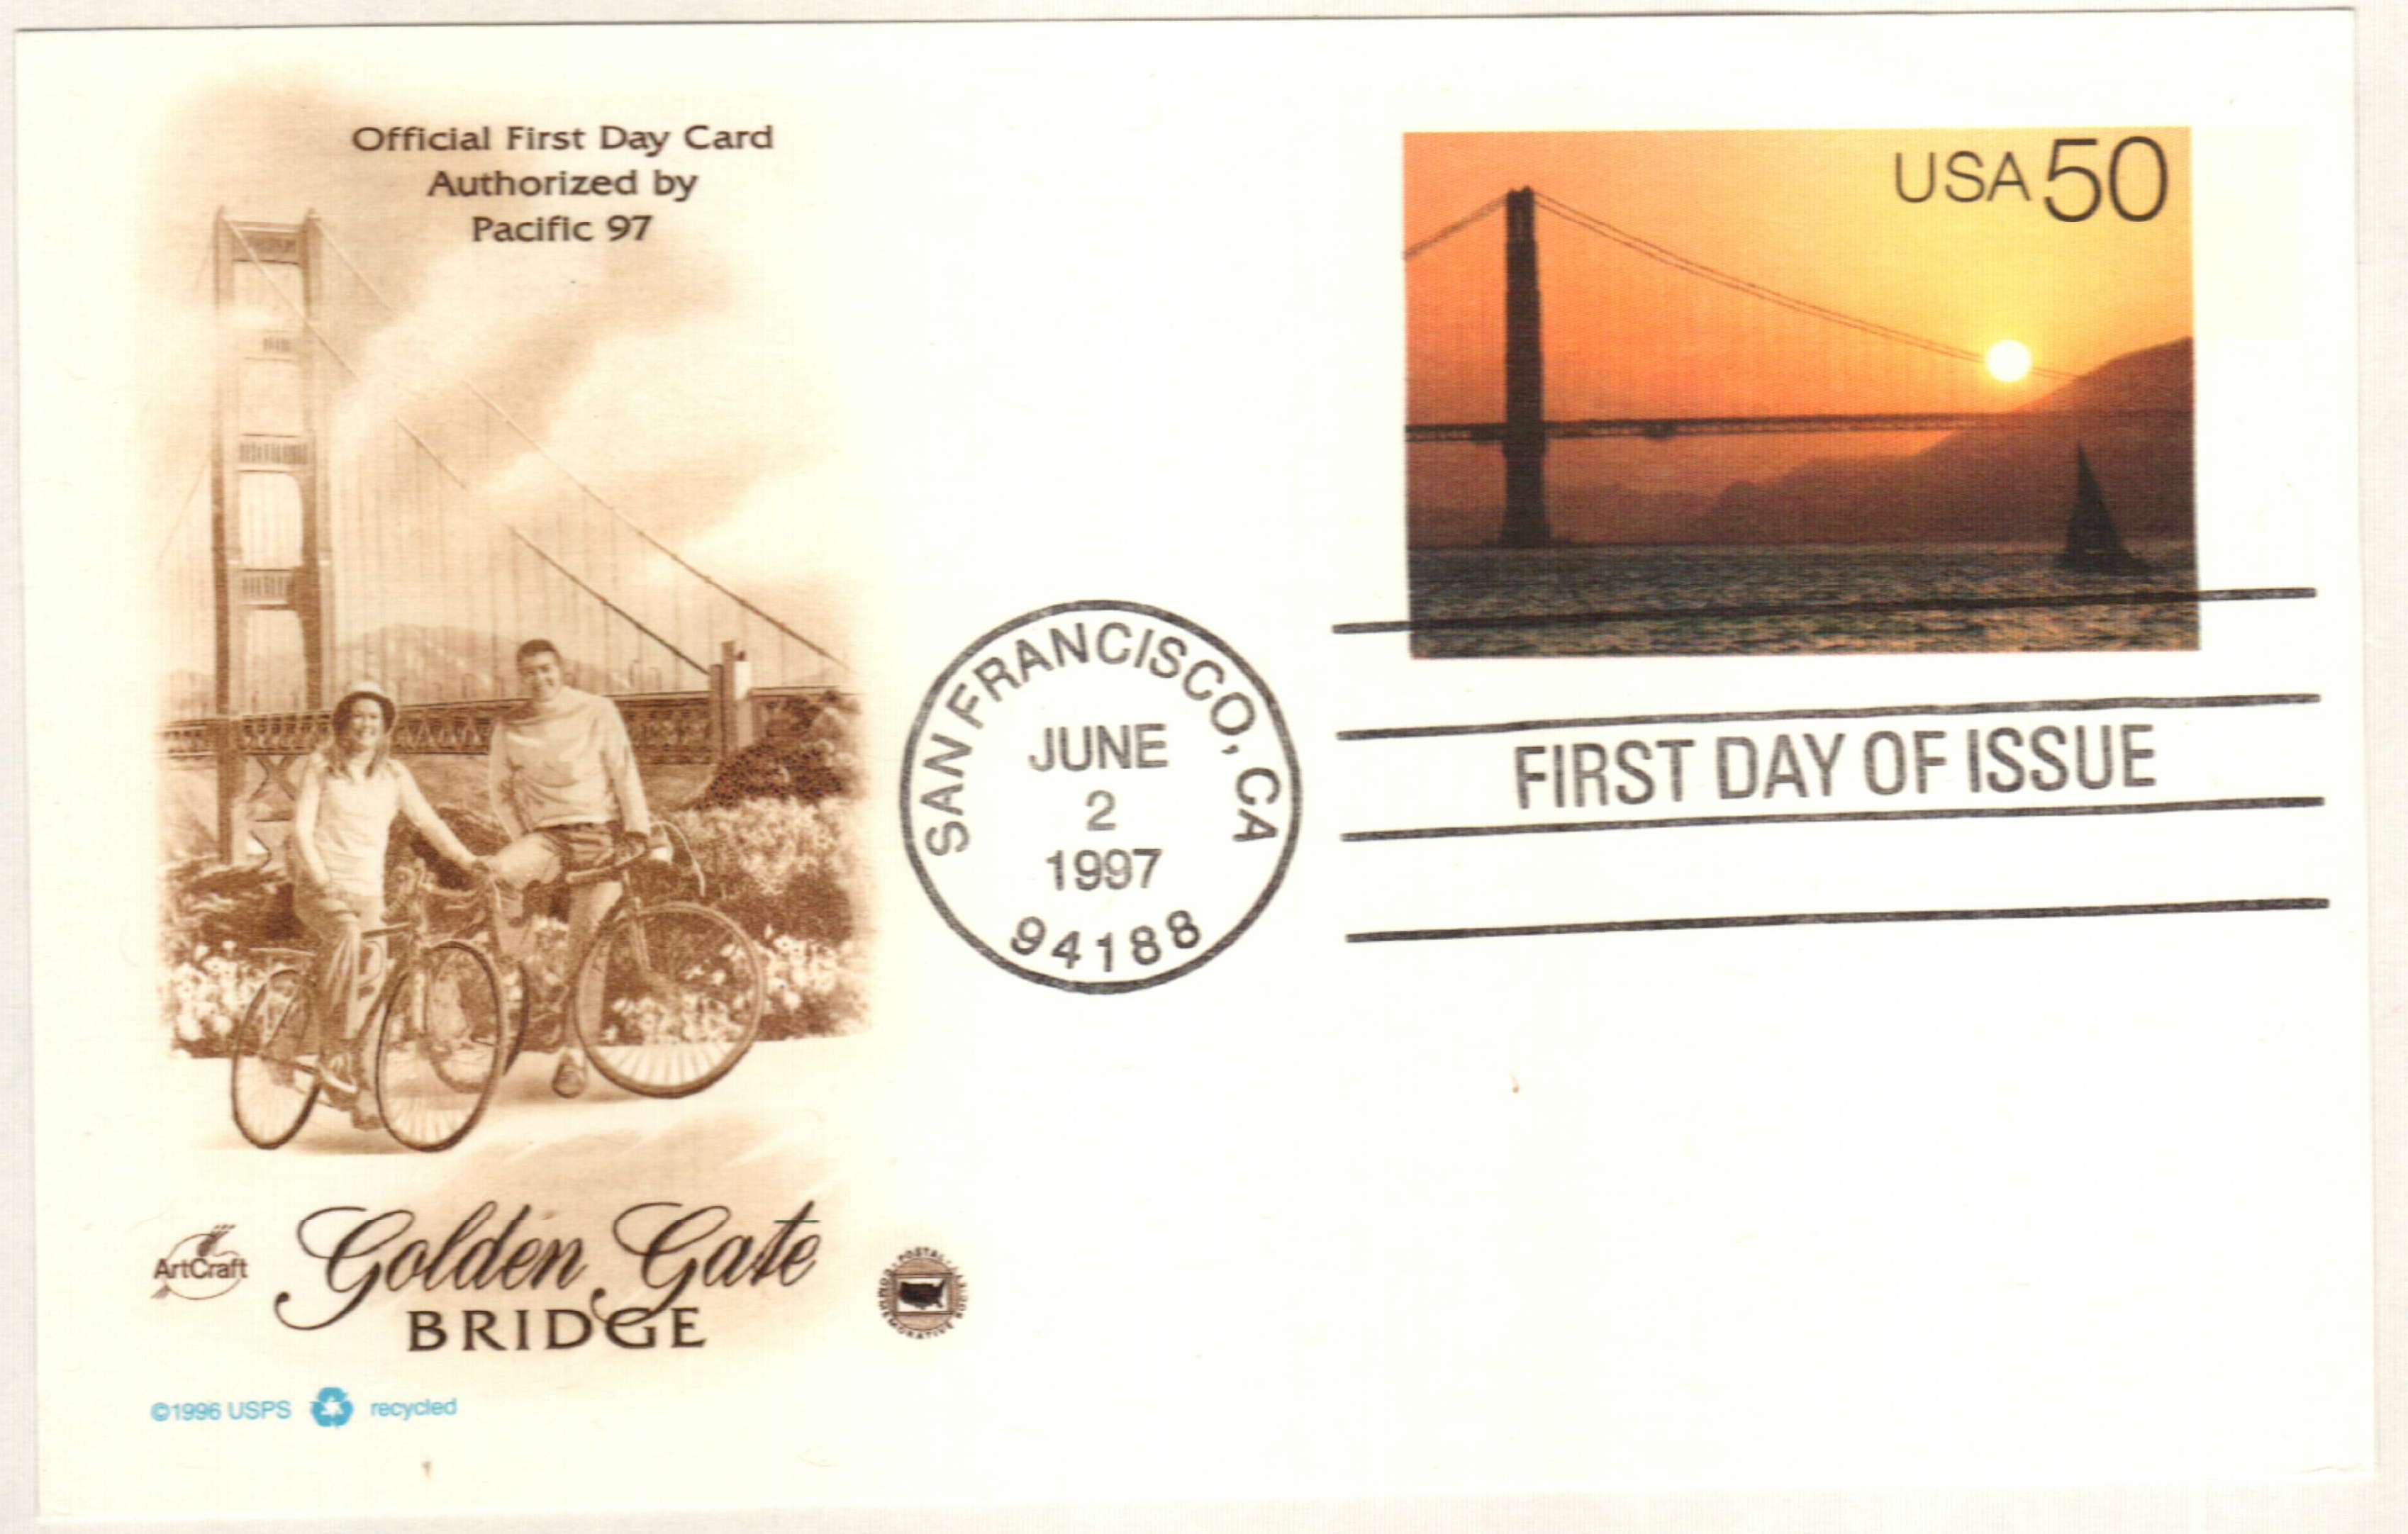 Golden Gate Bridge at sunset postal card